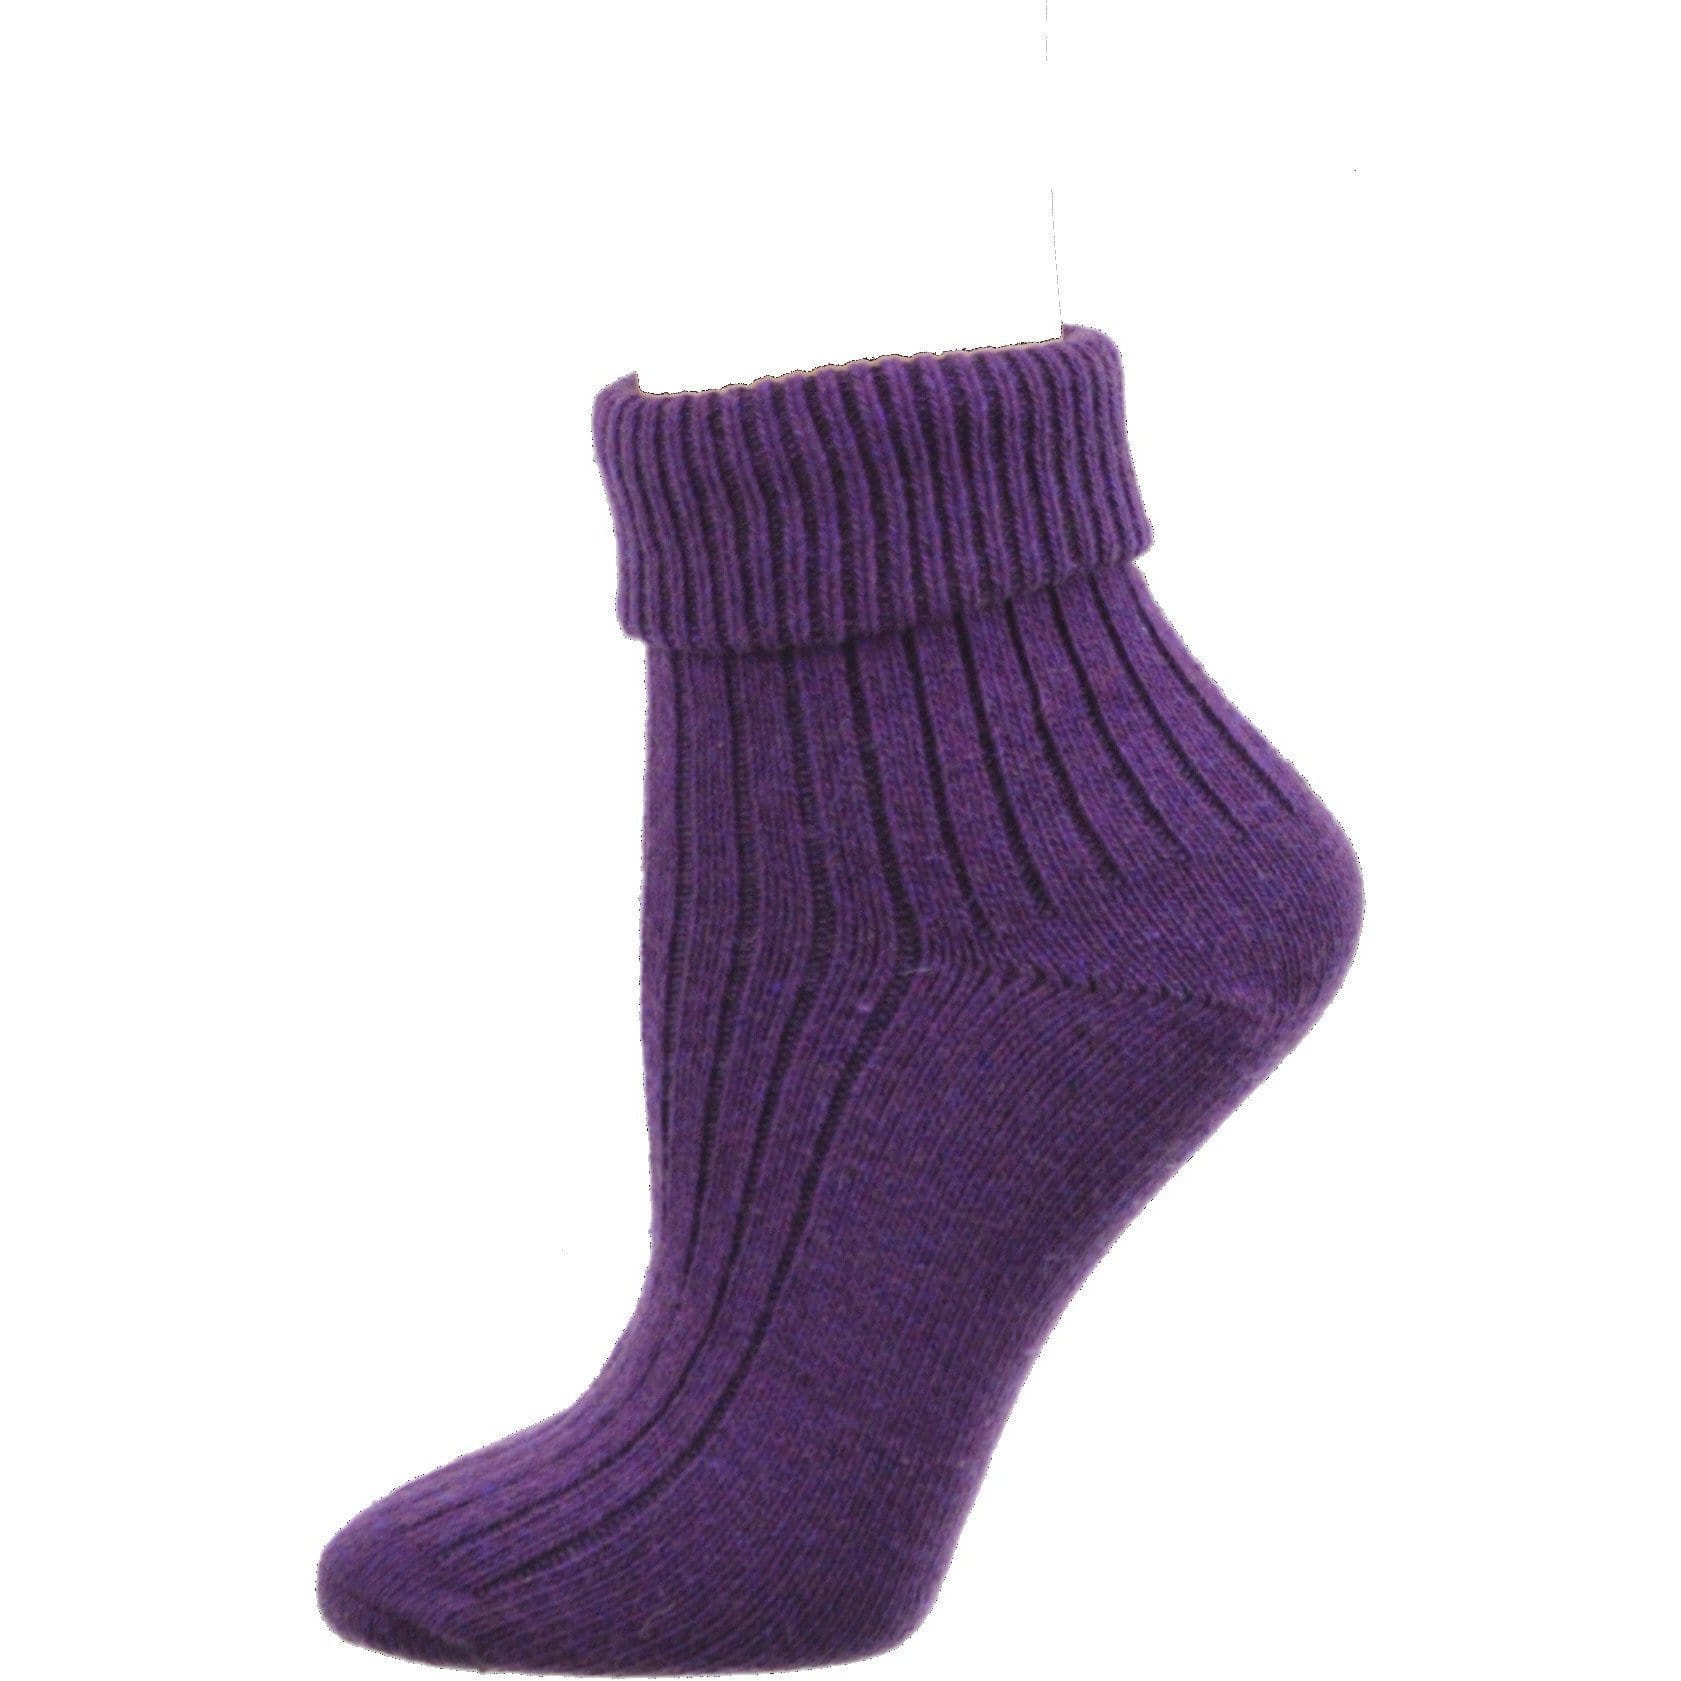 Wool/Cotton Blend Turncuff, Seamless Toe Socks For Women Women